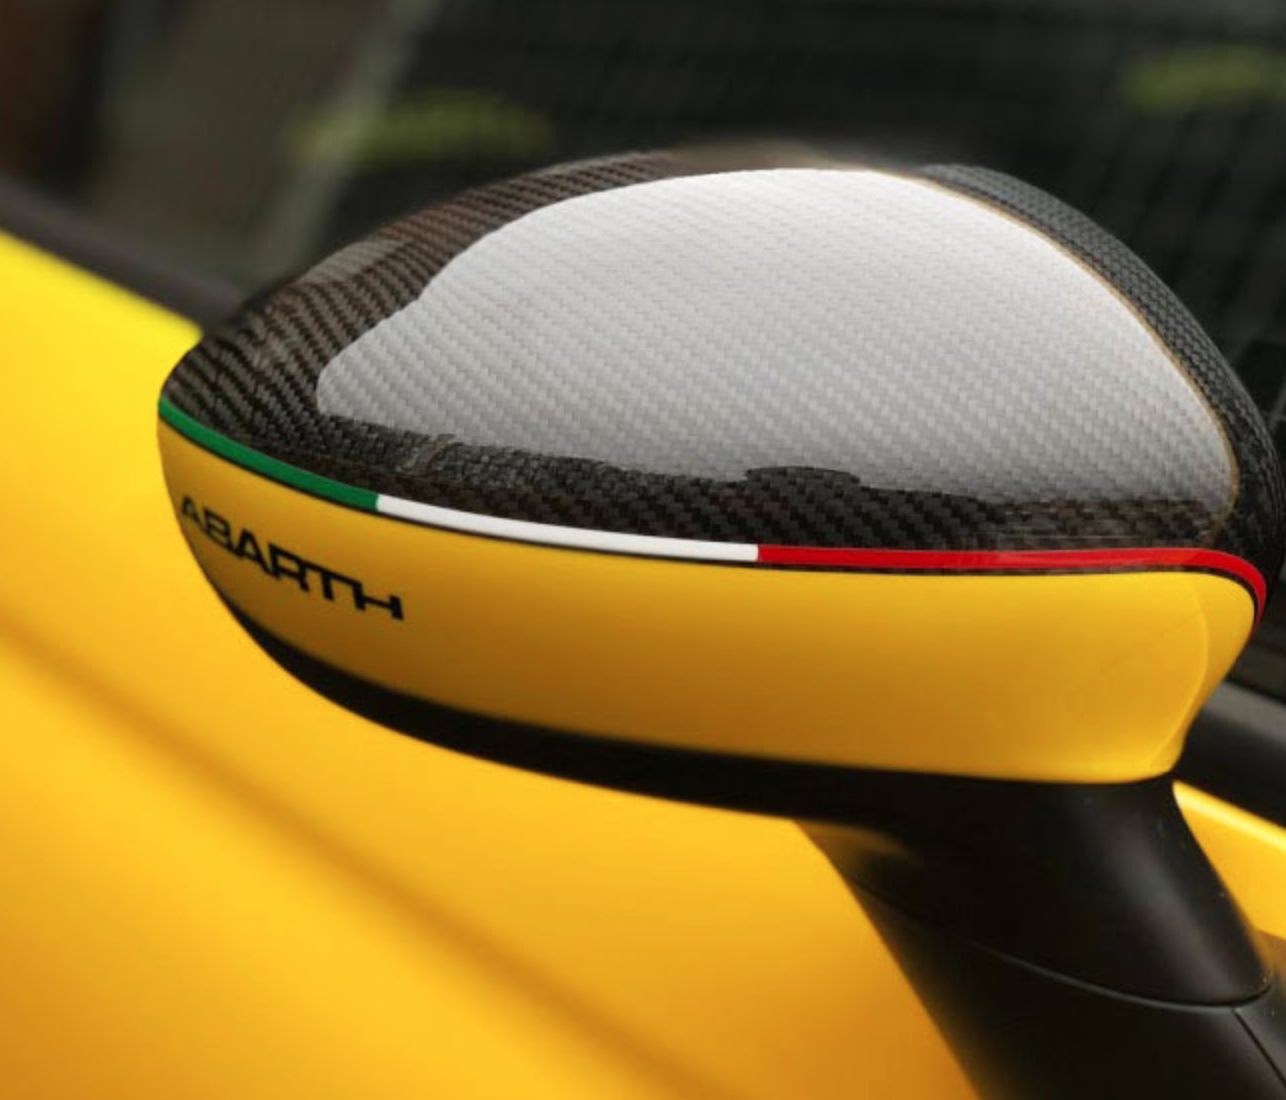 FIAT 500 Mirror Covers - Carbon Fiber - White w/ ABARTH + Italian Flag  Design